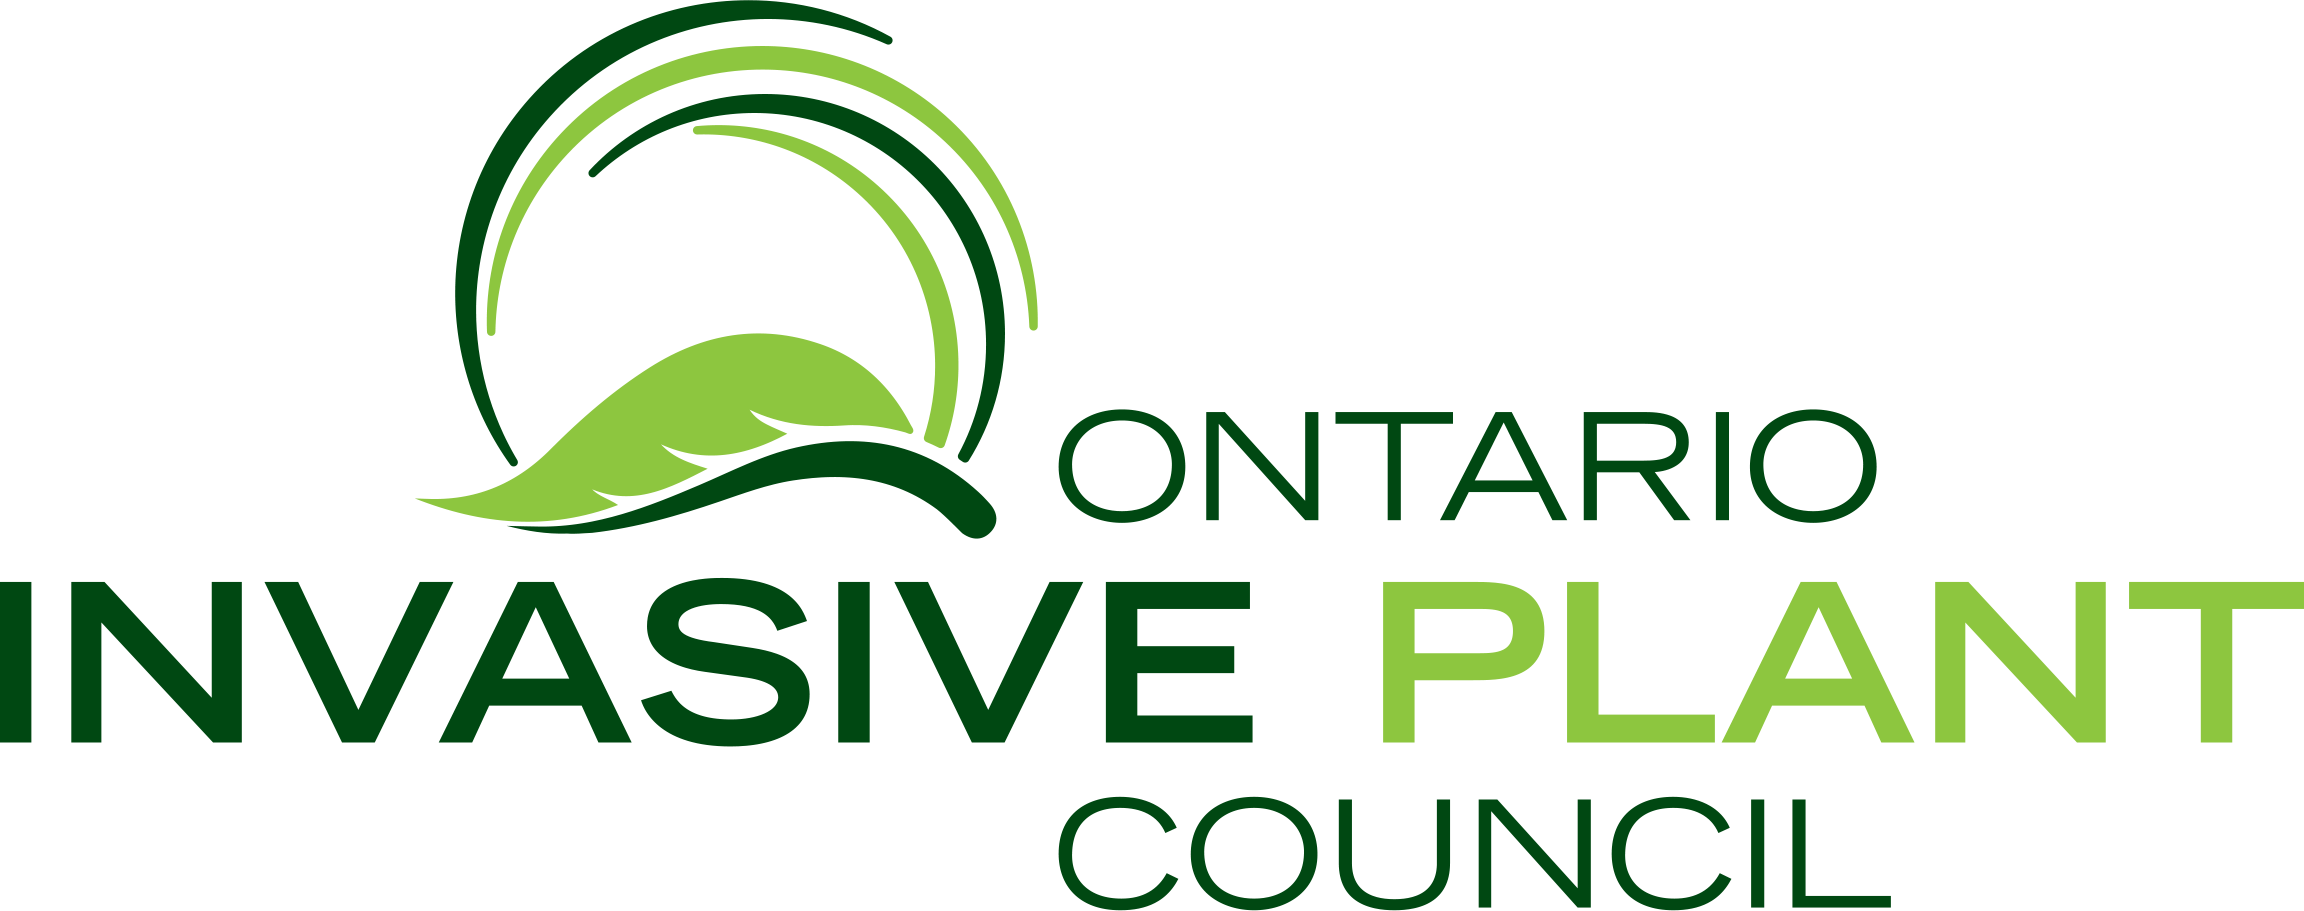 Ontario Invasive Plant Council logo